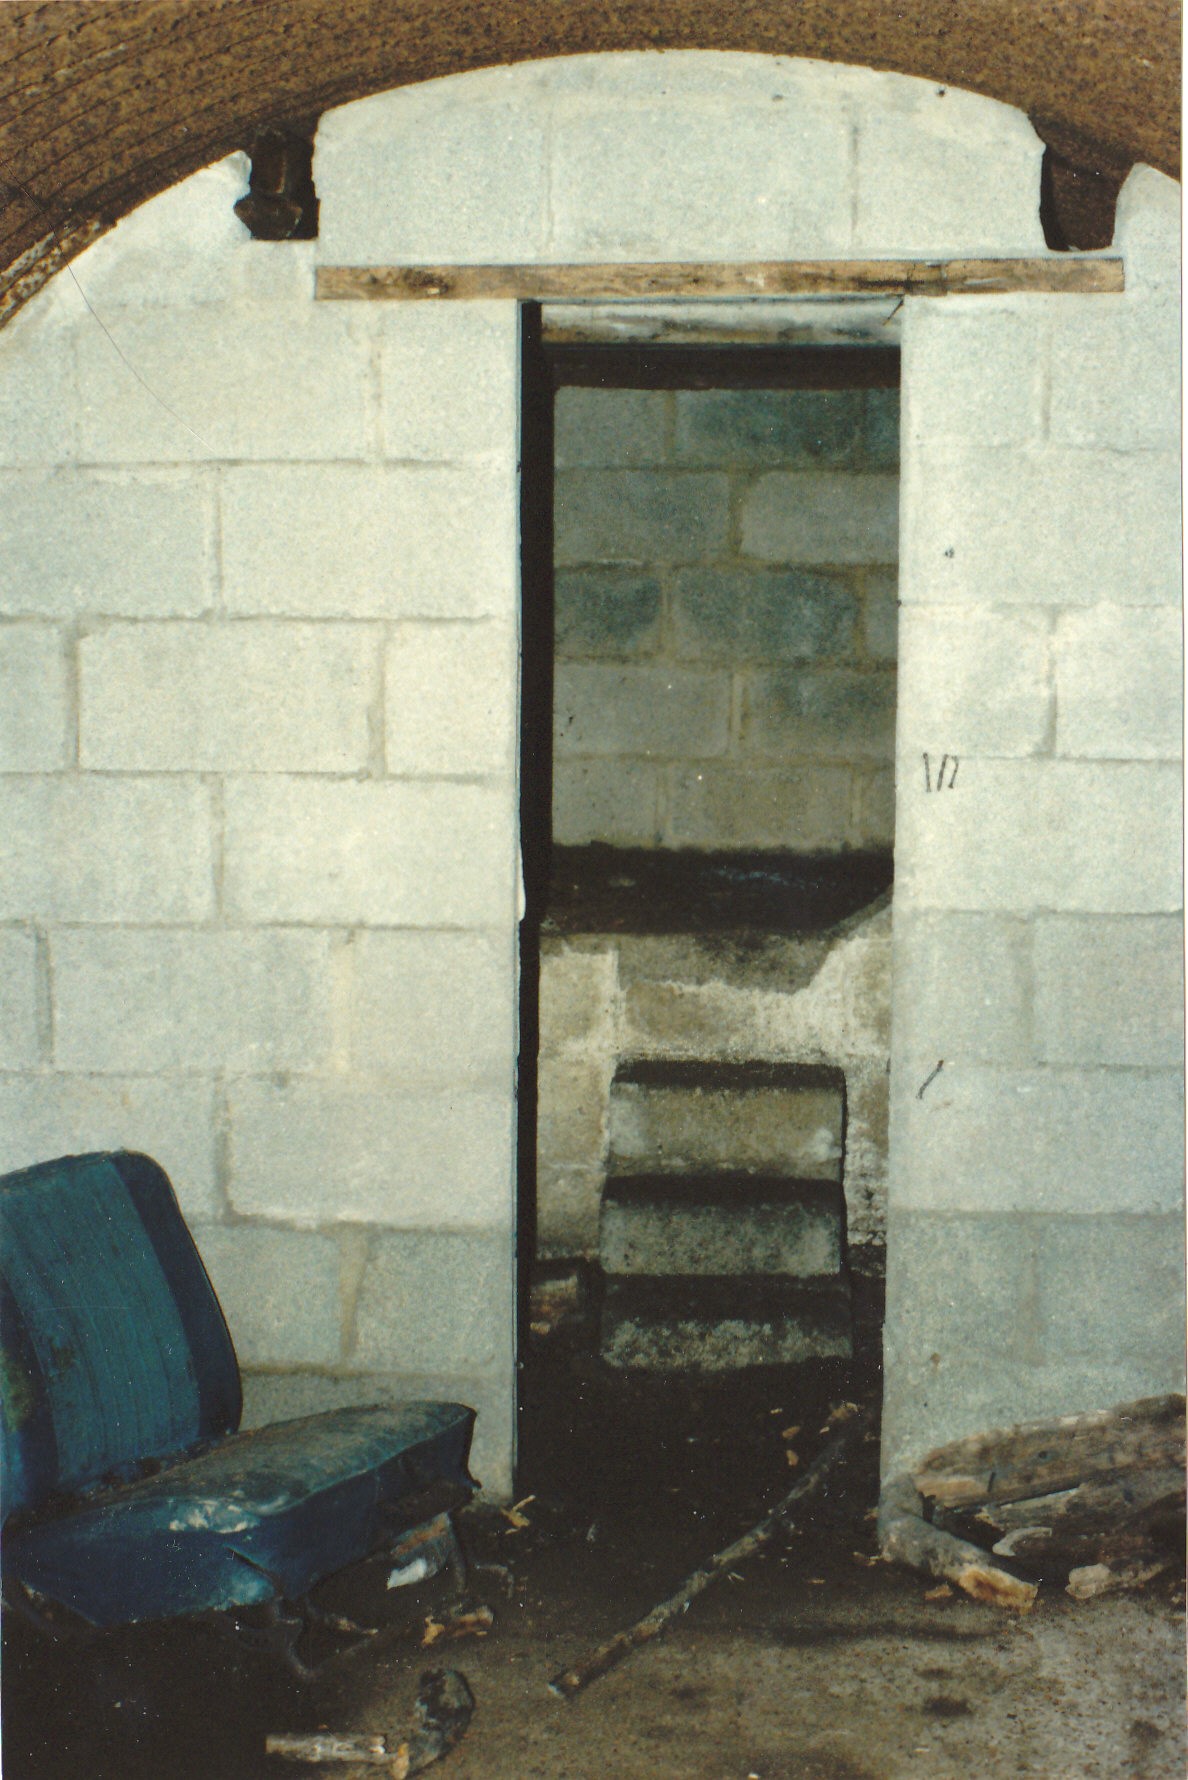 Plympton inside OB by entrance shaft 1992